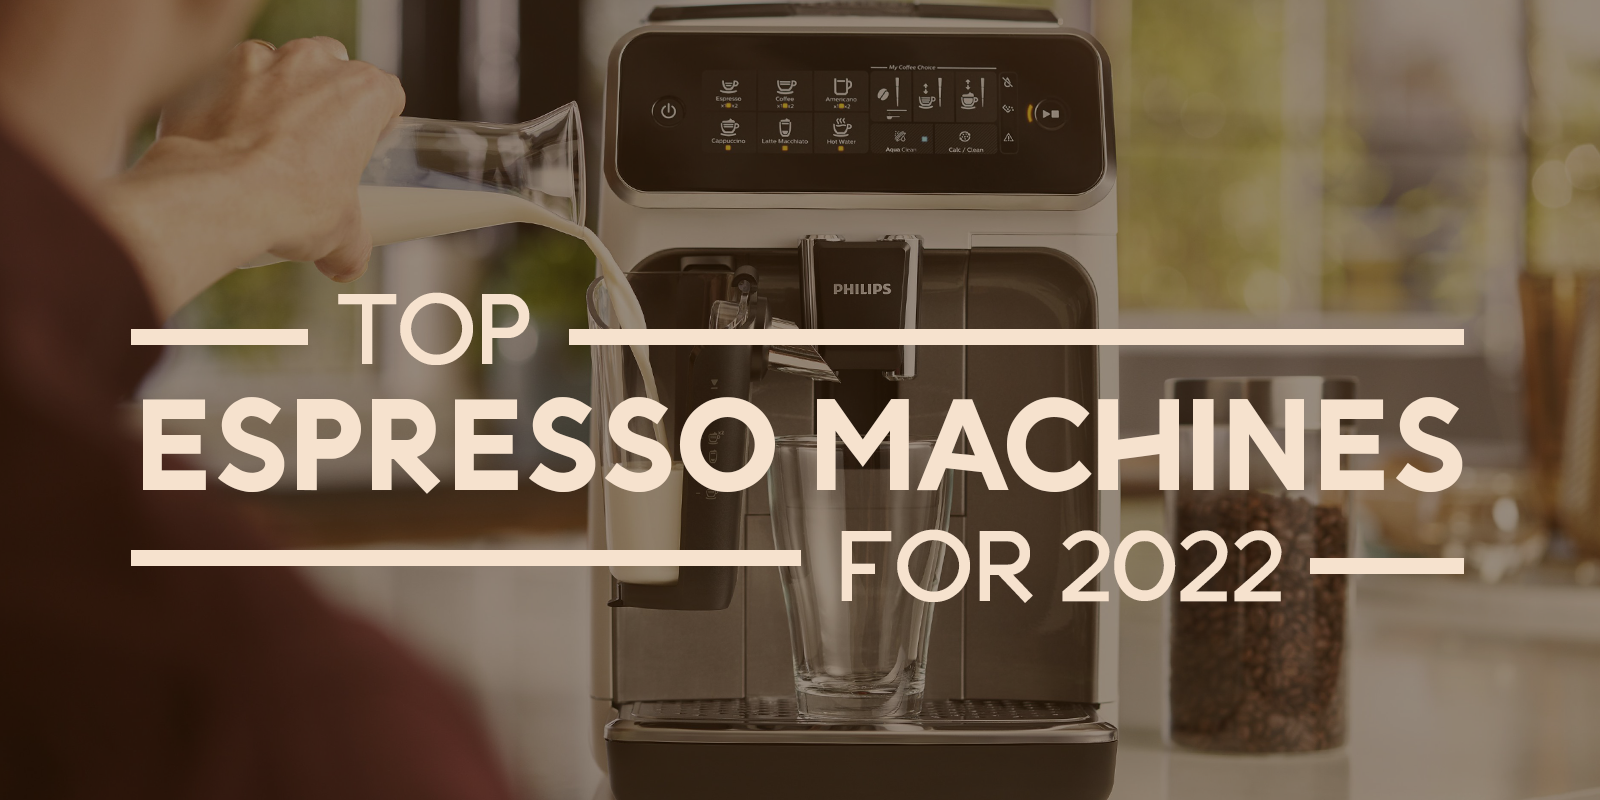 Philips Saeco 4300 Series Superautomatic Espresso Machine Latte Go